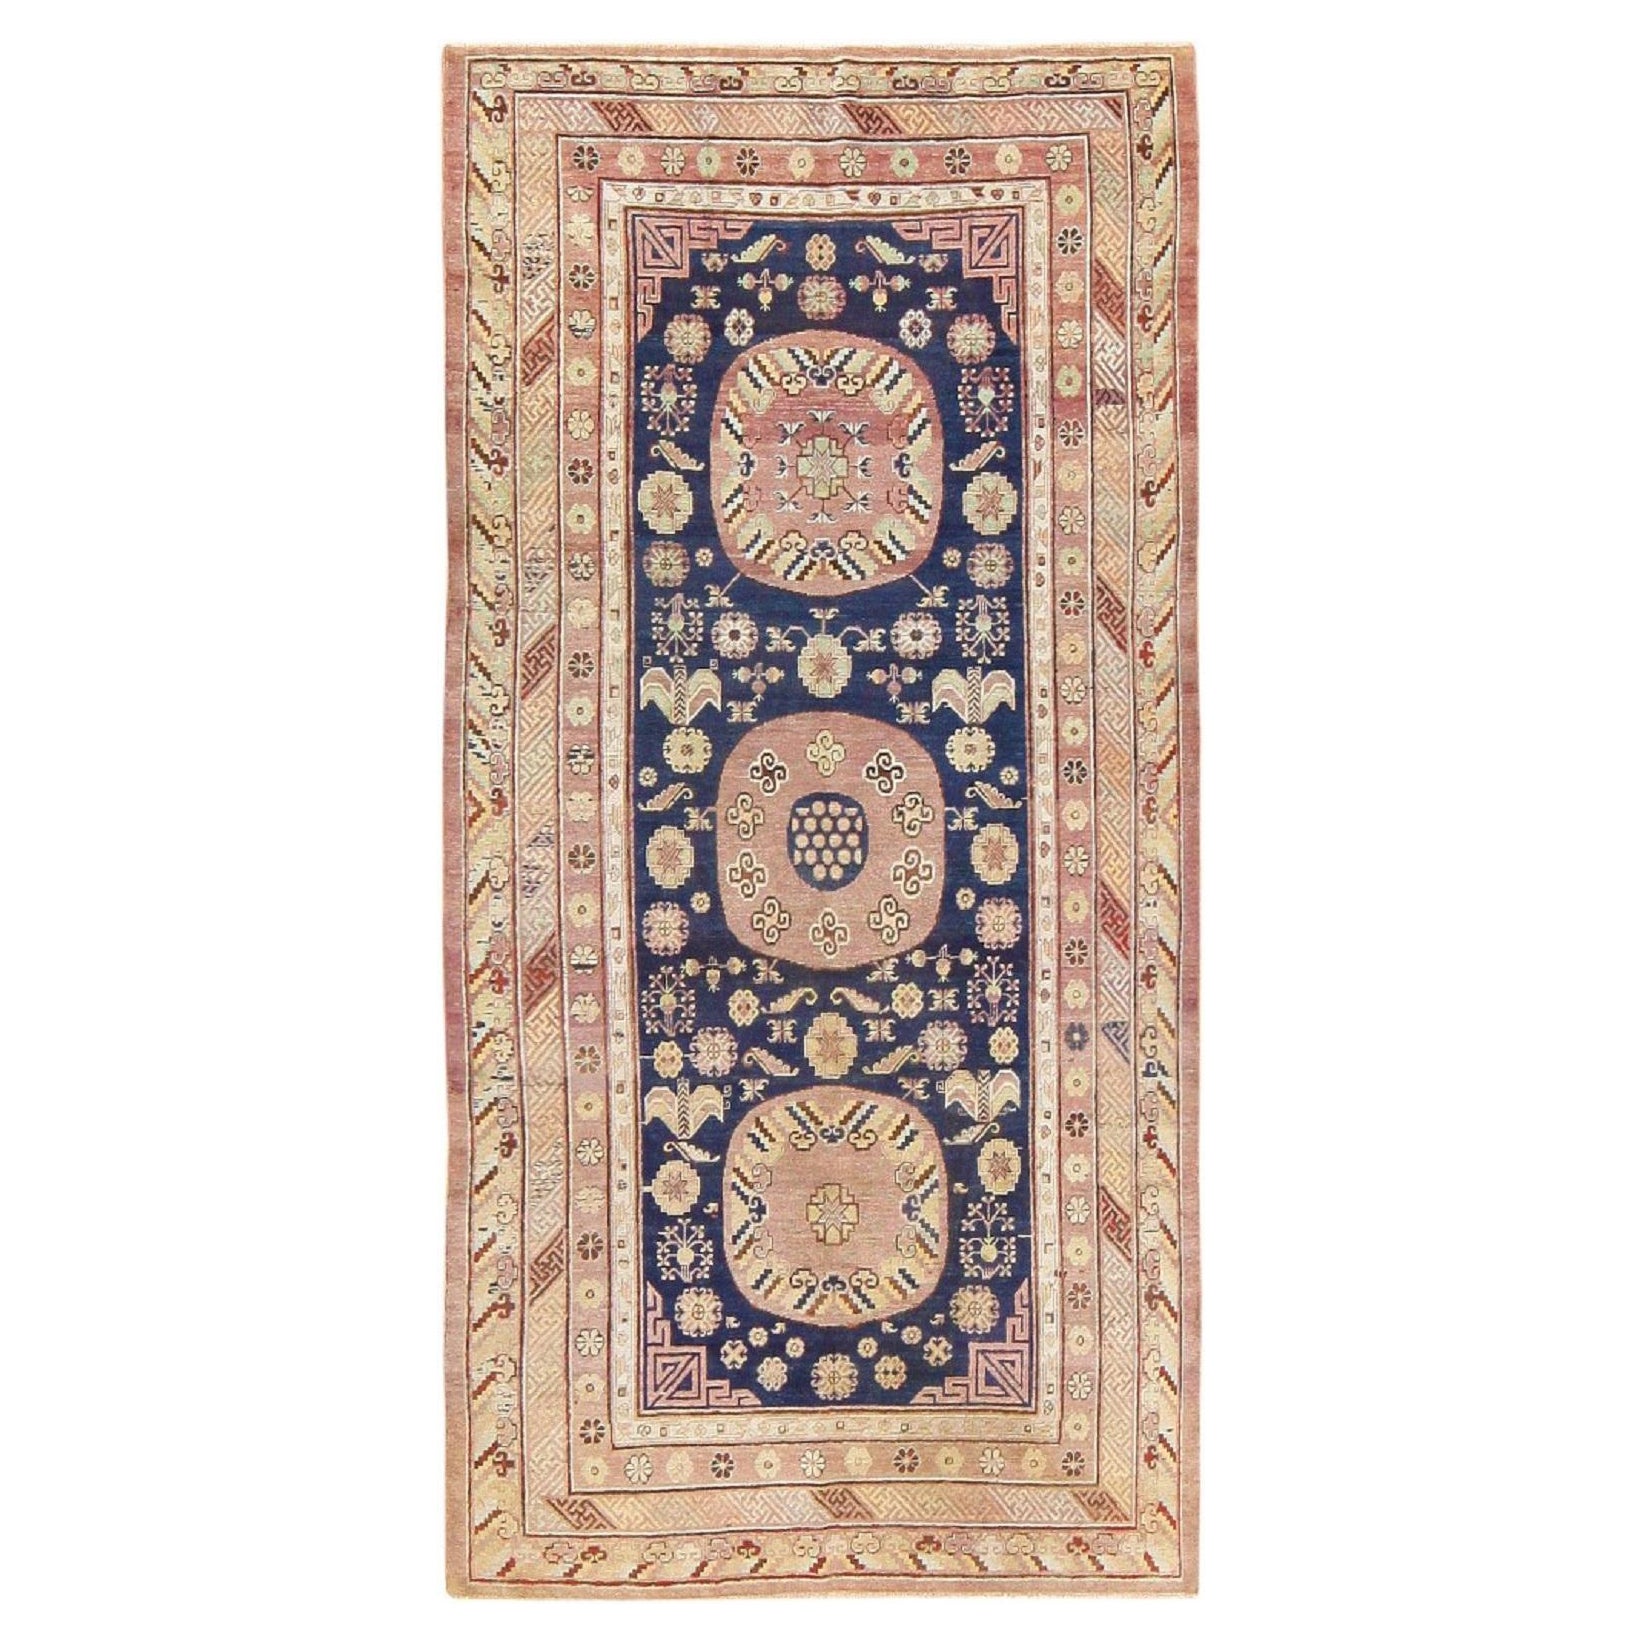 Antique Khotan Carpet from East Turkestan. 5 ft 5 in x 11 ft For Sale